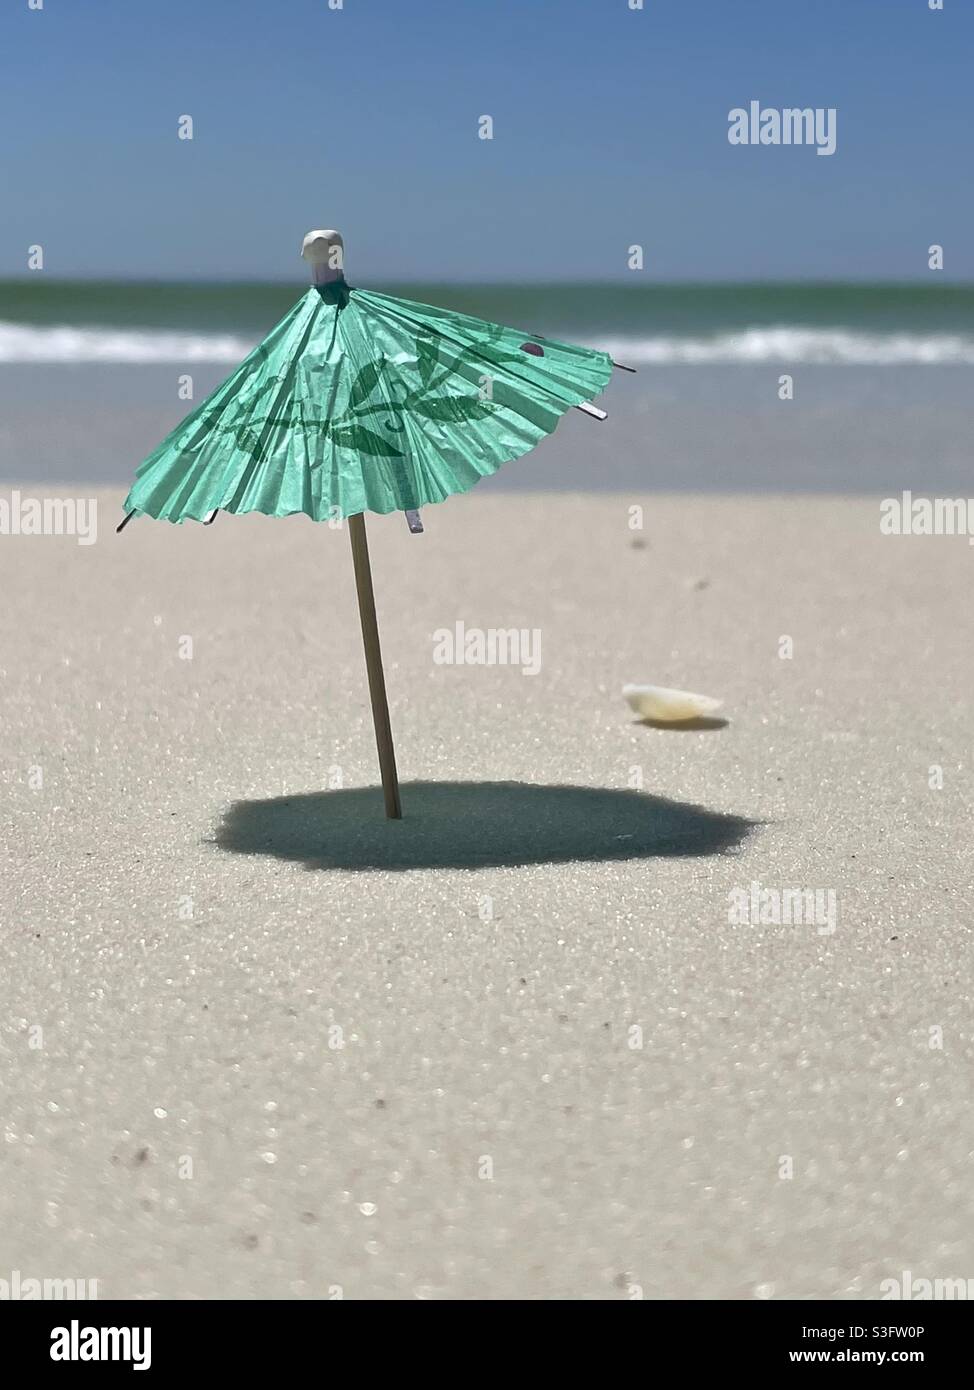 Select focus on a miniature umbrella on beach sand Stock Photo